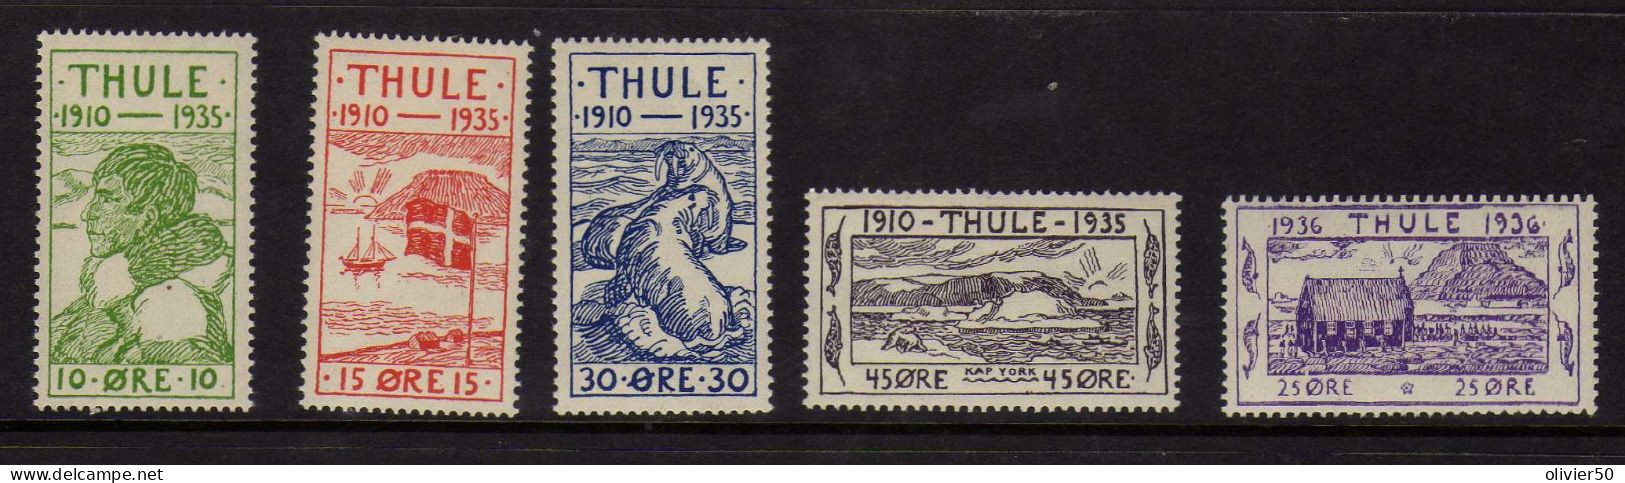 Groenland  - Thule - (1935-36) - Knud Rasmussen -  Morses - Paysages -  Neuf** - MNH - Thule